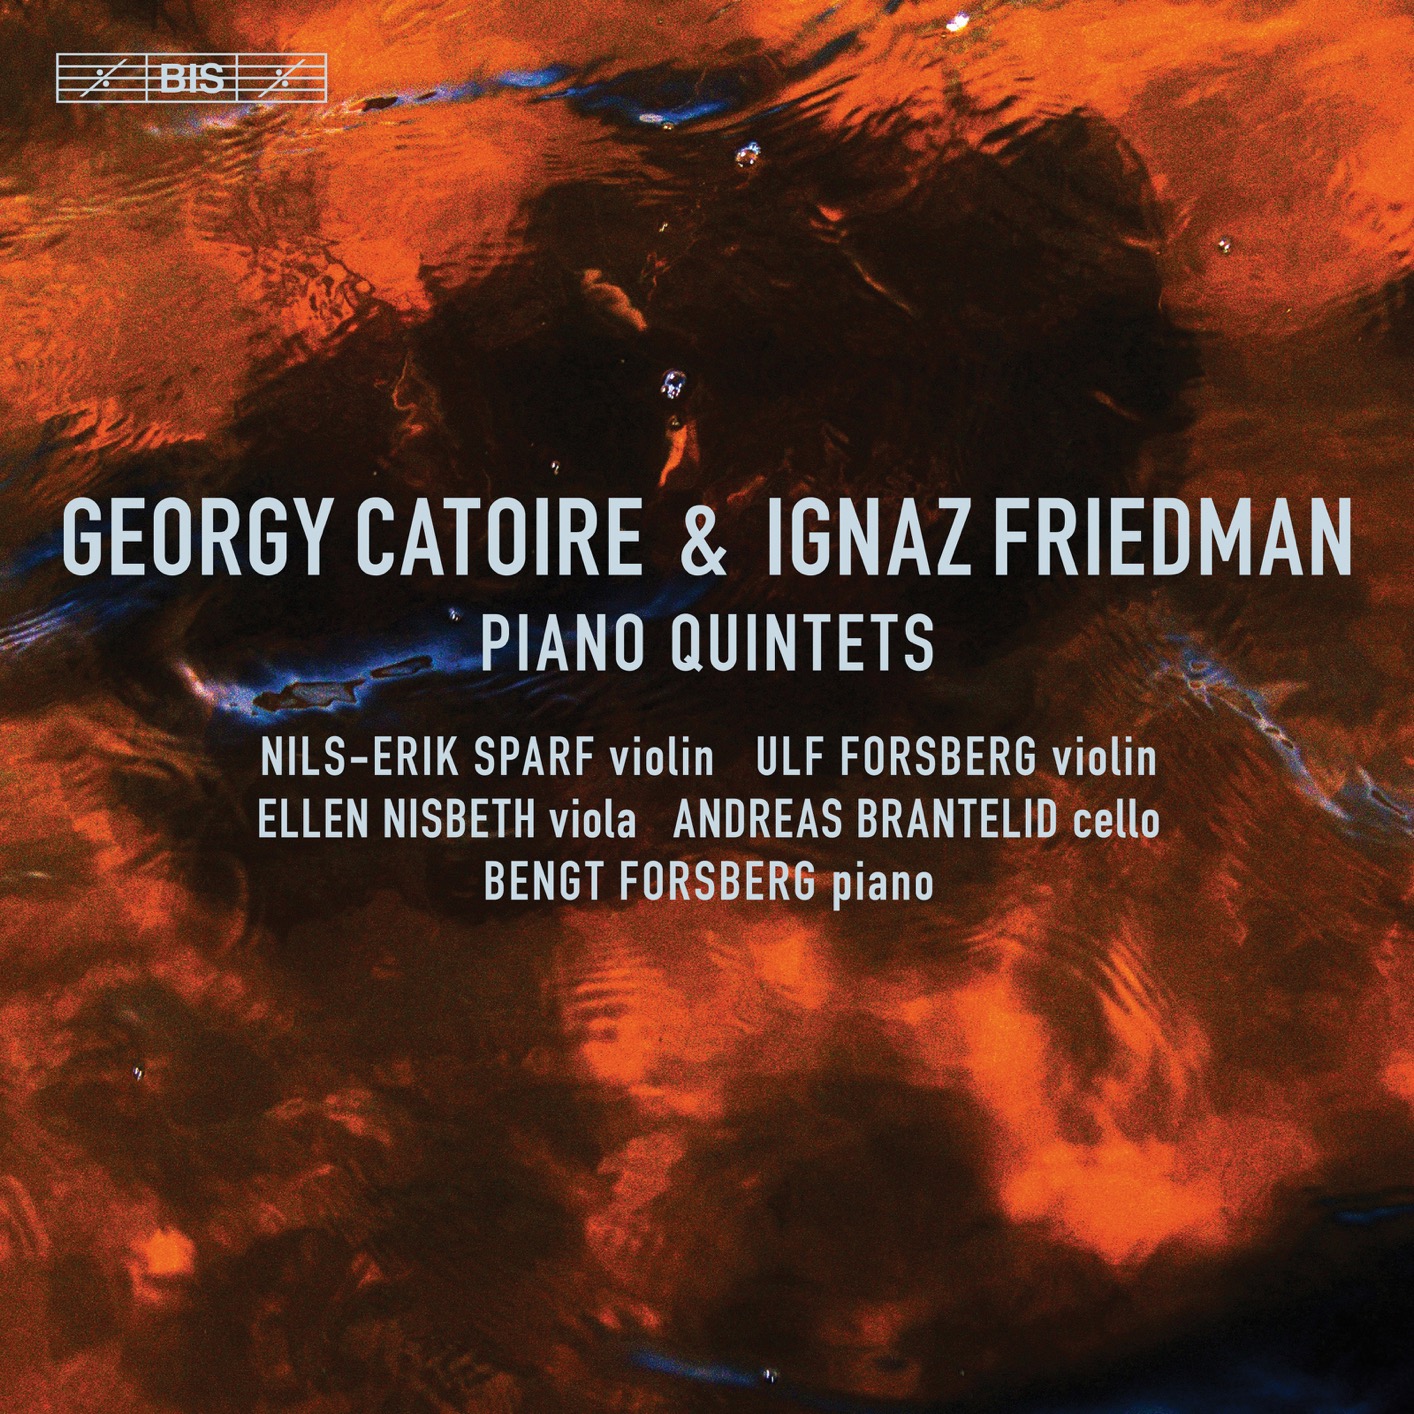 VA – Catoire & Friedman: Piano Quintets (2019) [FLAC 24bit/96kHz]